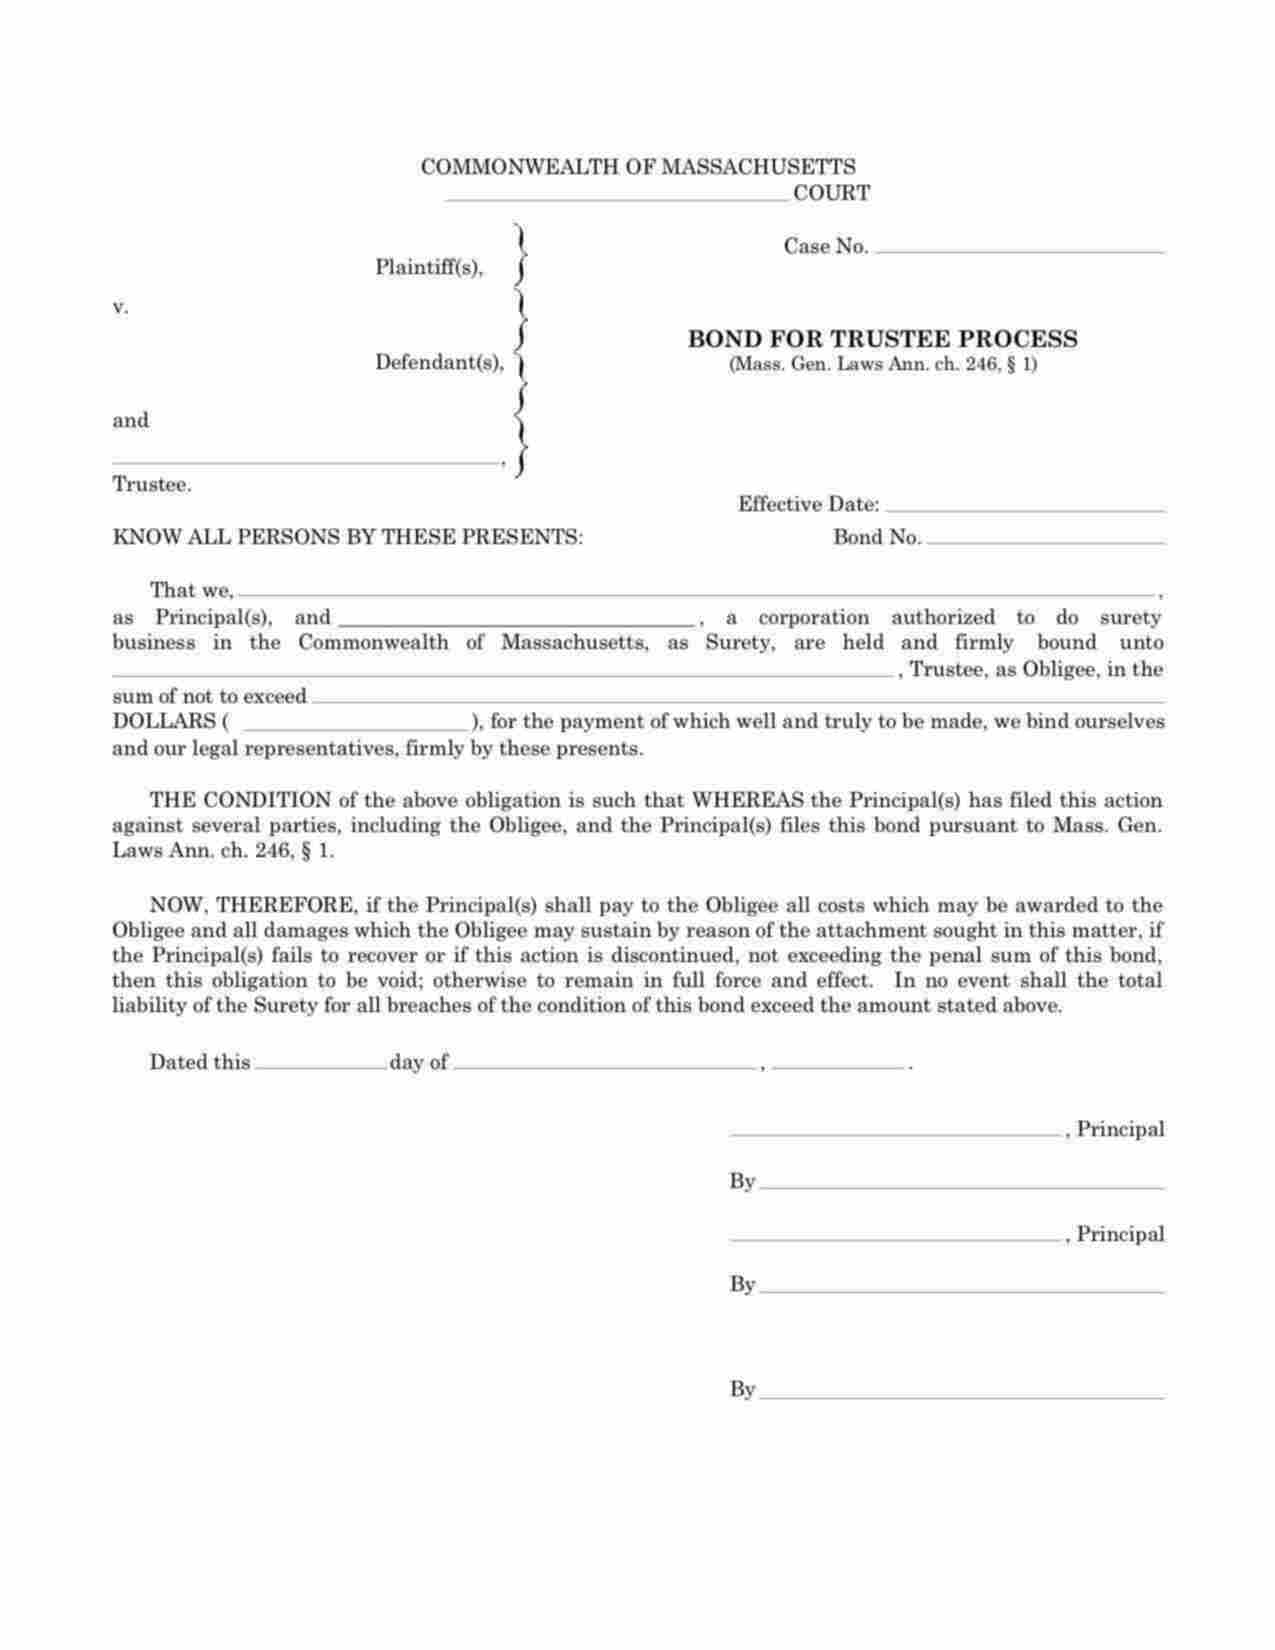 Massachusetts Trustee Process Bond Form